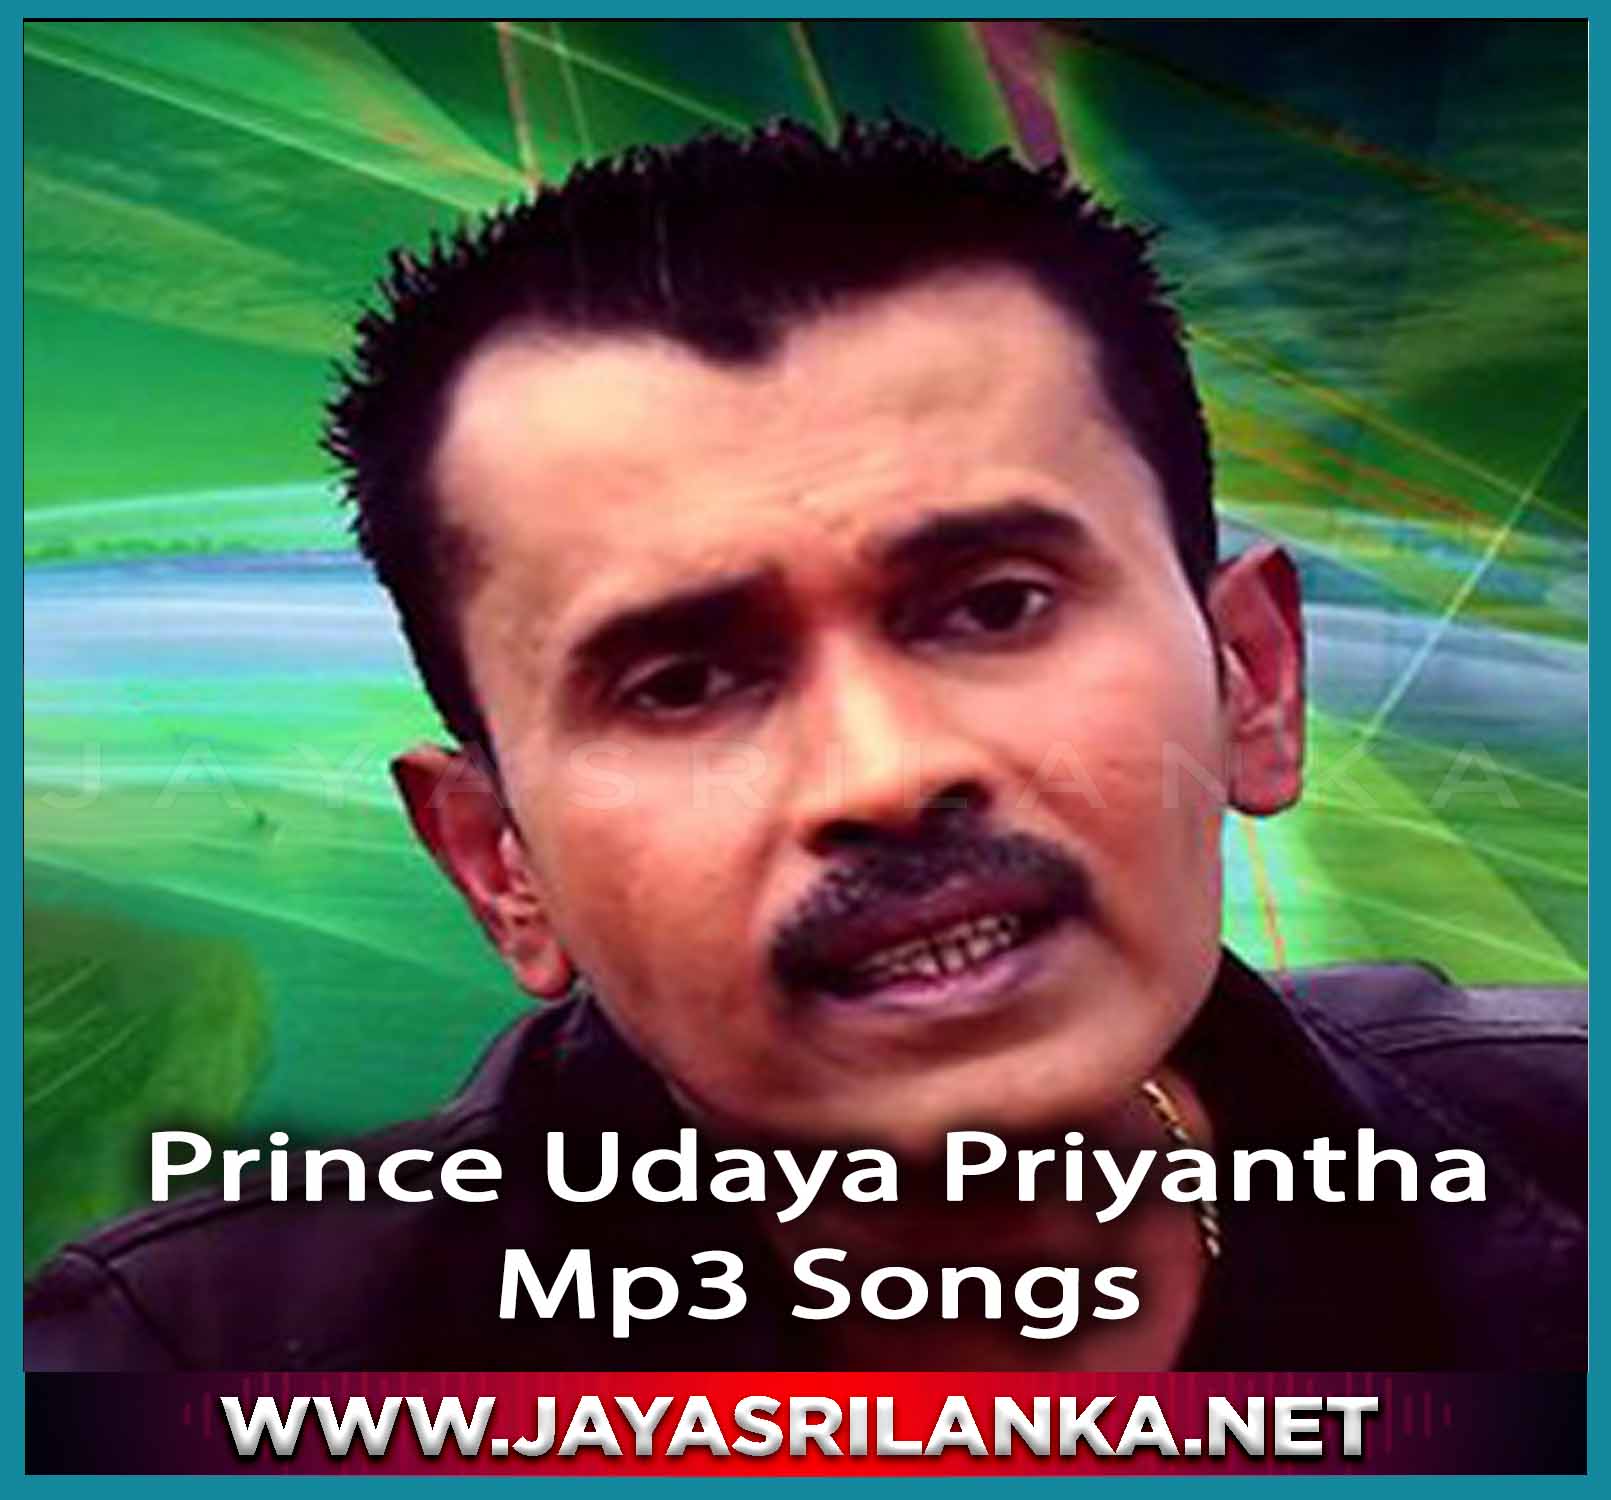 Histhanak Thiya Thibunath - Prince Udaya Priyantha mp3 Image